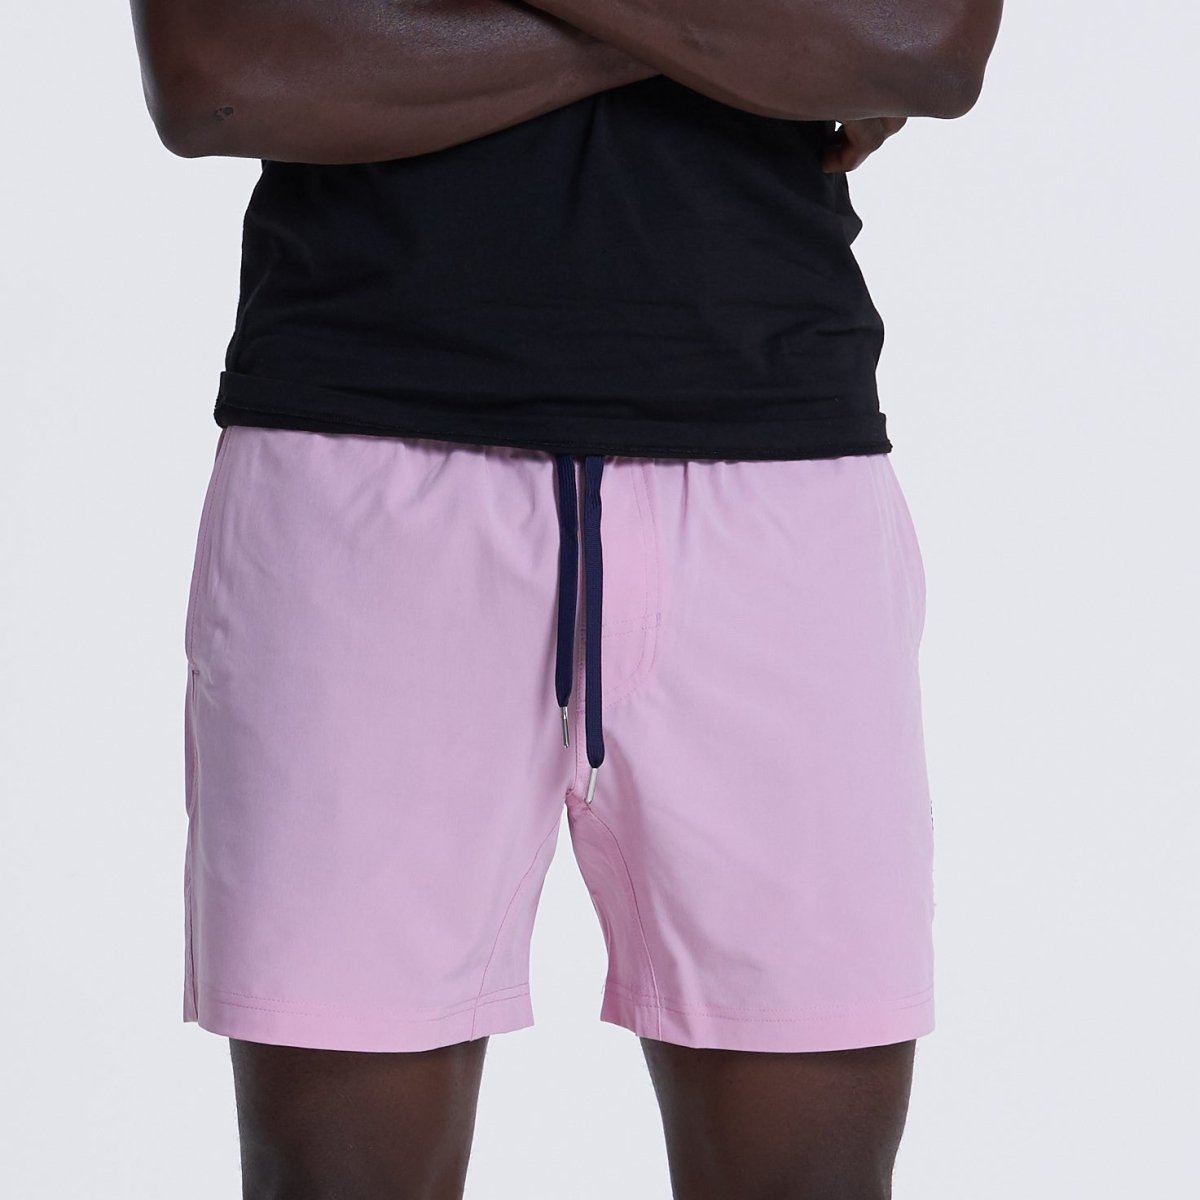 Fashion Killa 7" - Dusty Pink Shorts - Bamboo Ave. - Men's Shorts